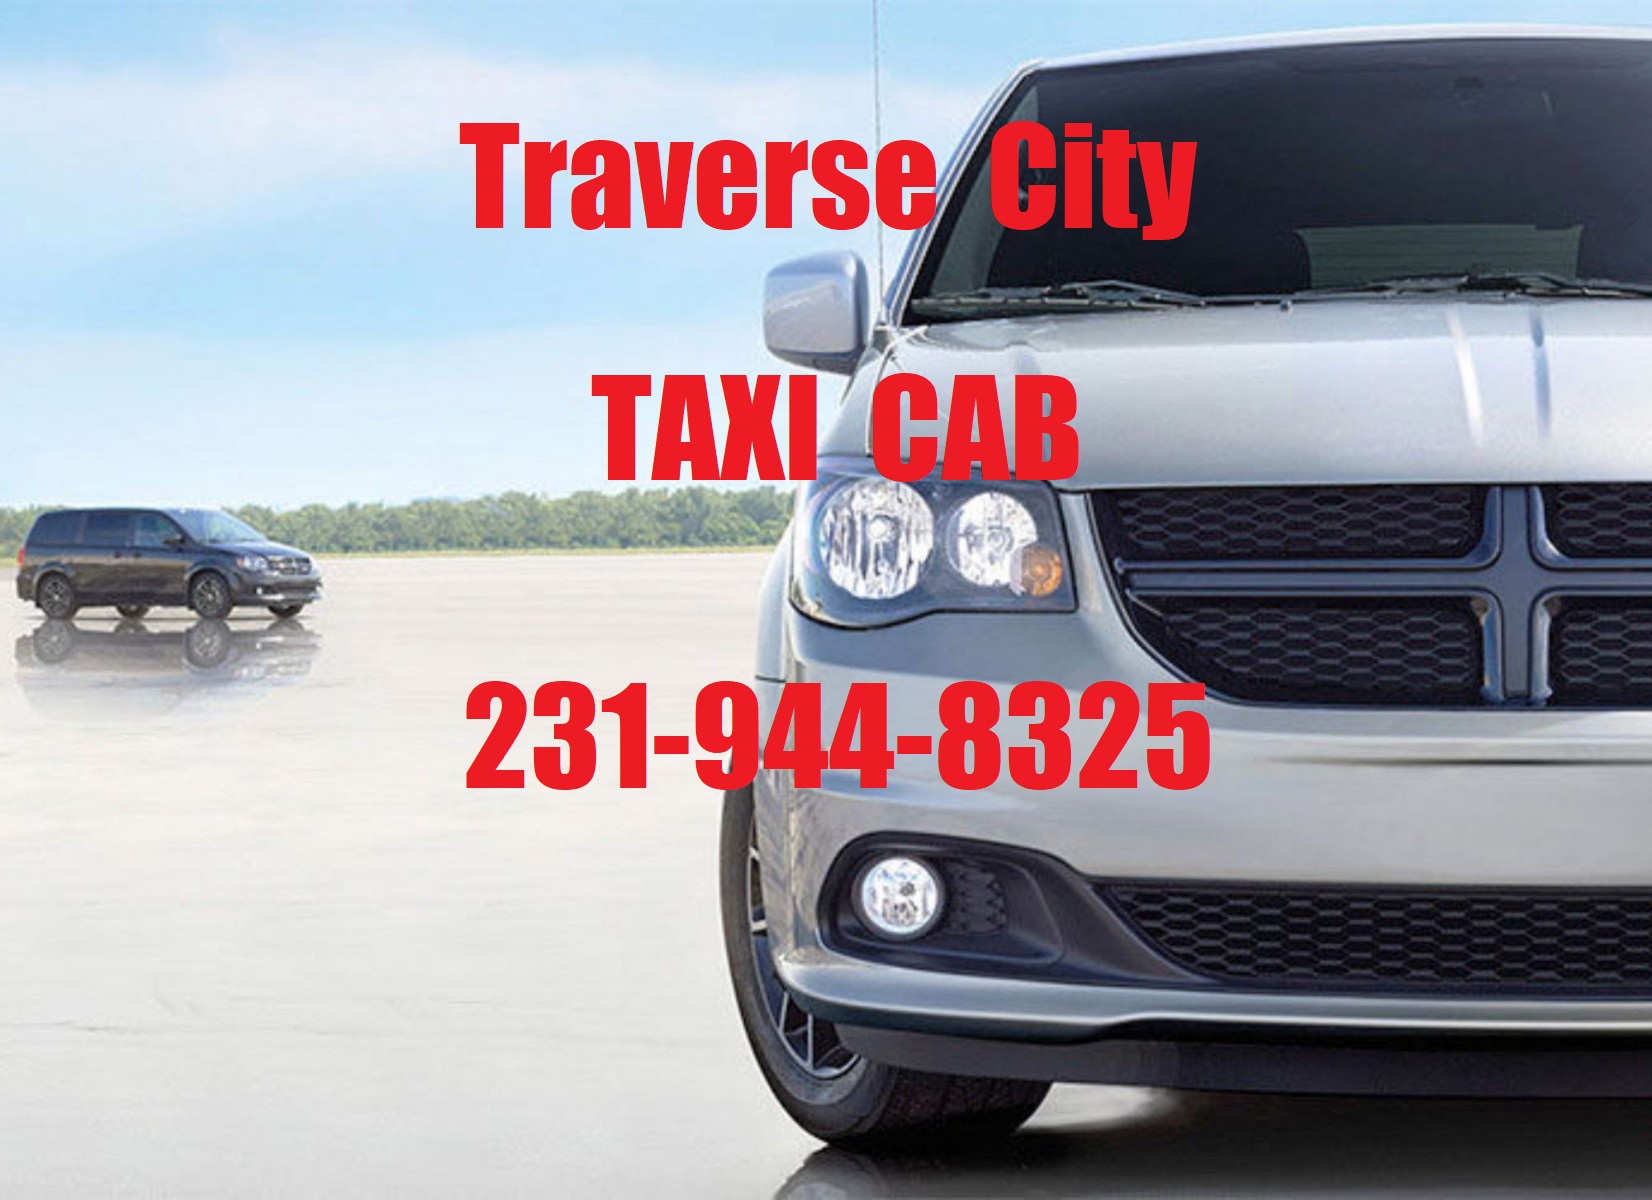 Traverse City Taxi